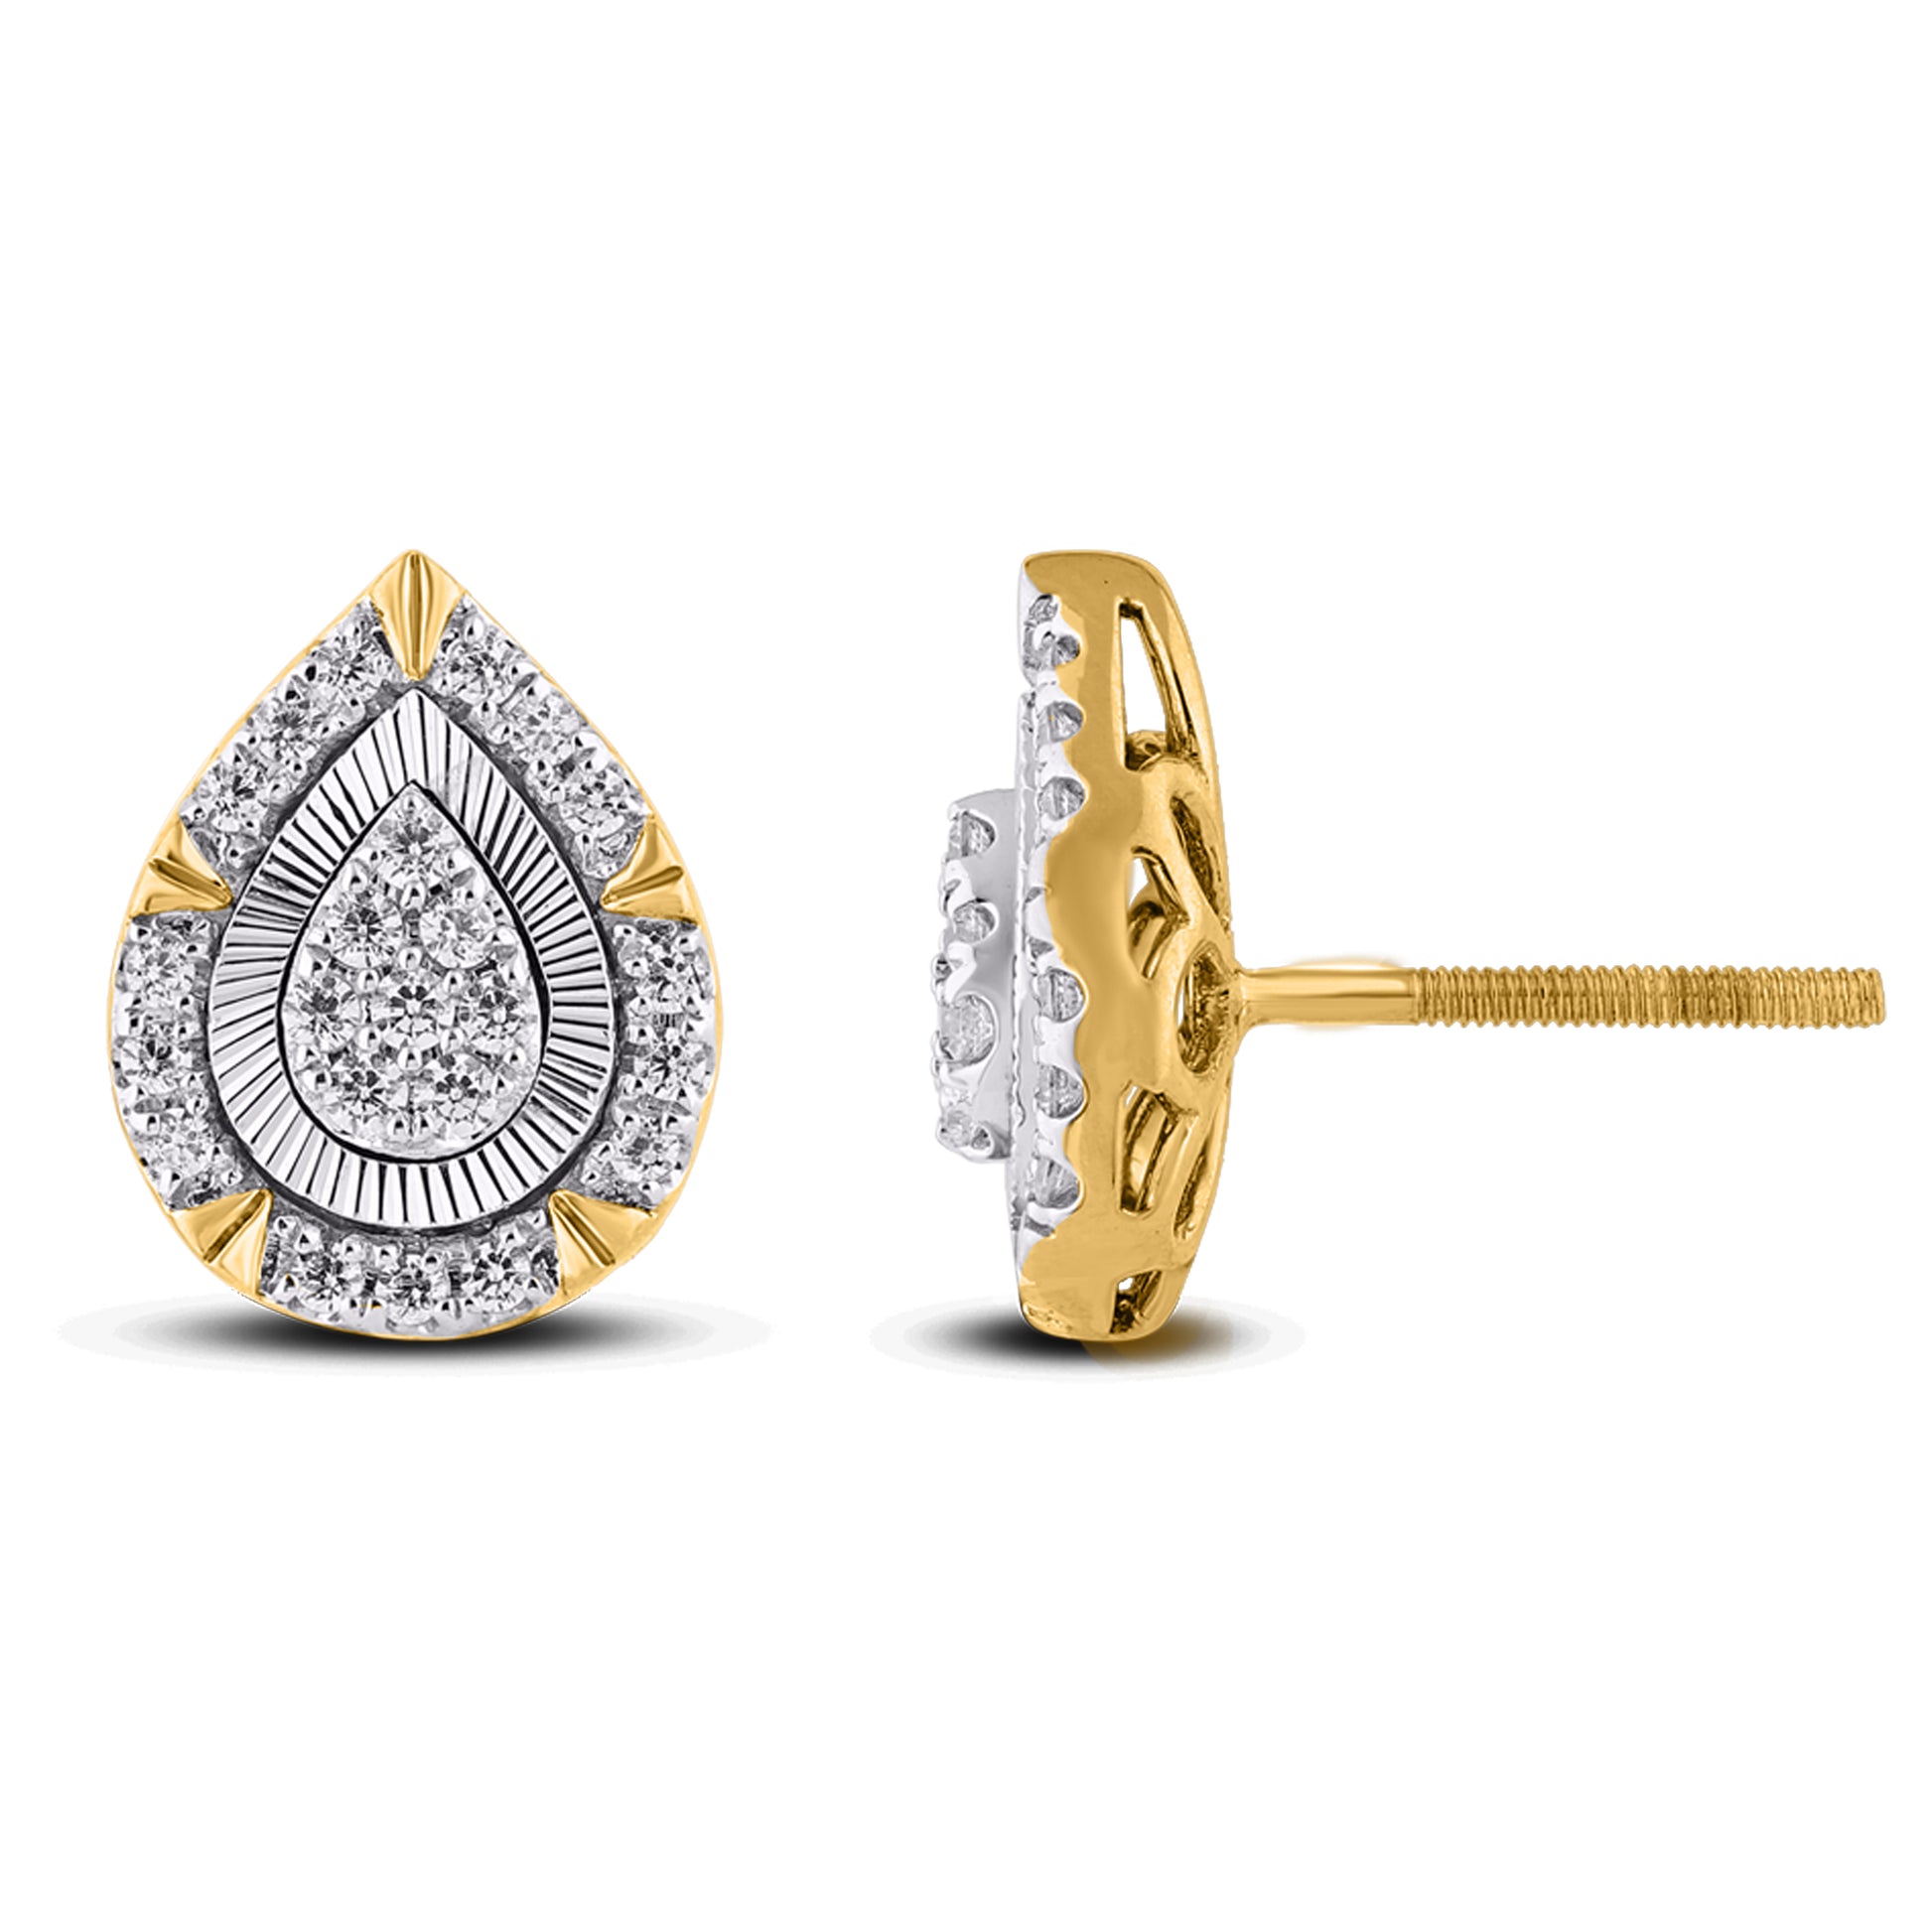 10 Karat Two-Tone (White and Yellow) Gold 0.33 Carat Diamond Pear Earrings-0129972-WY